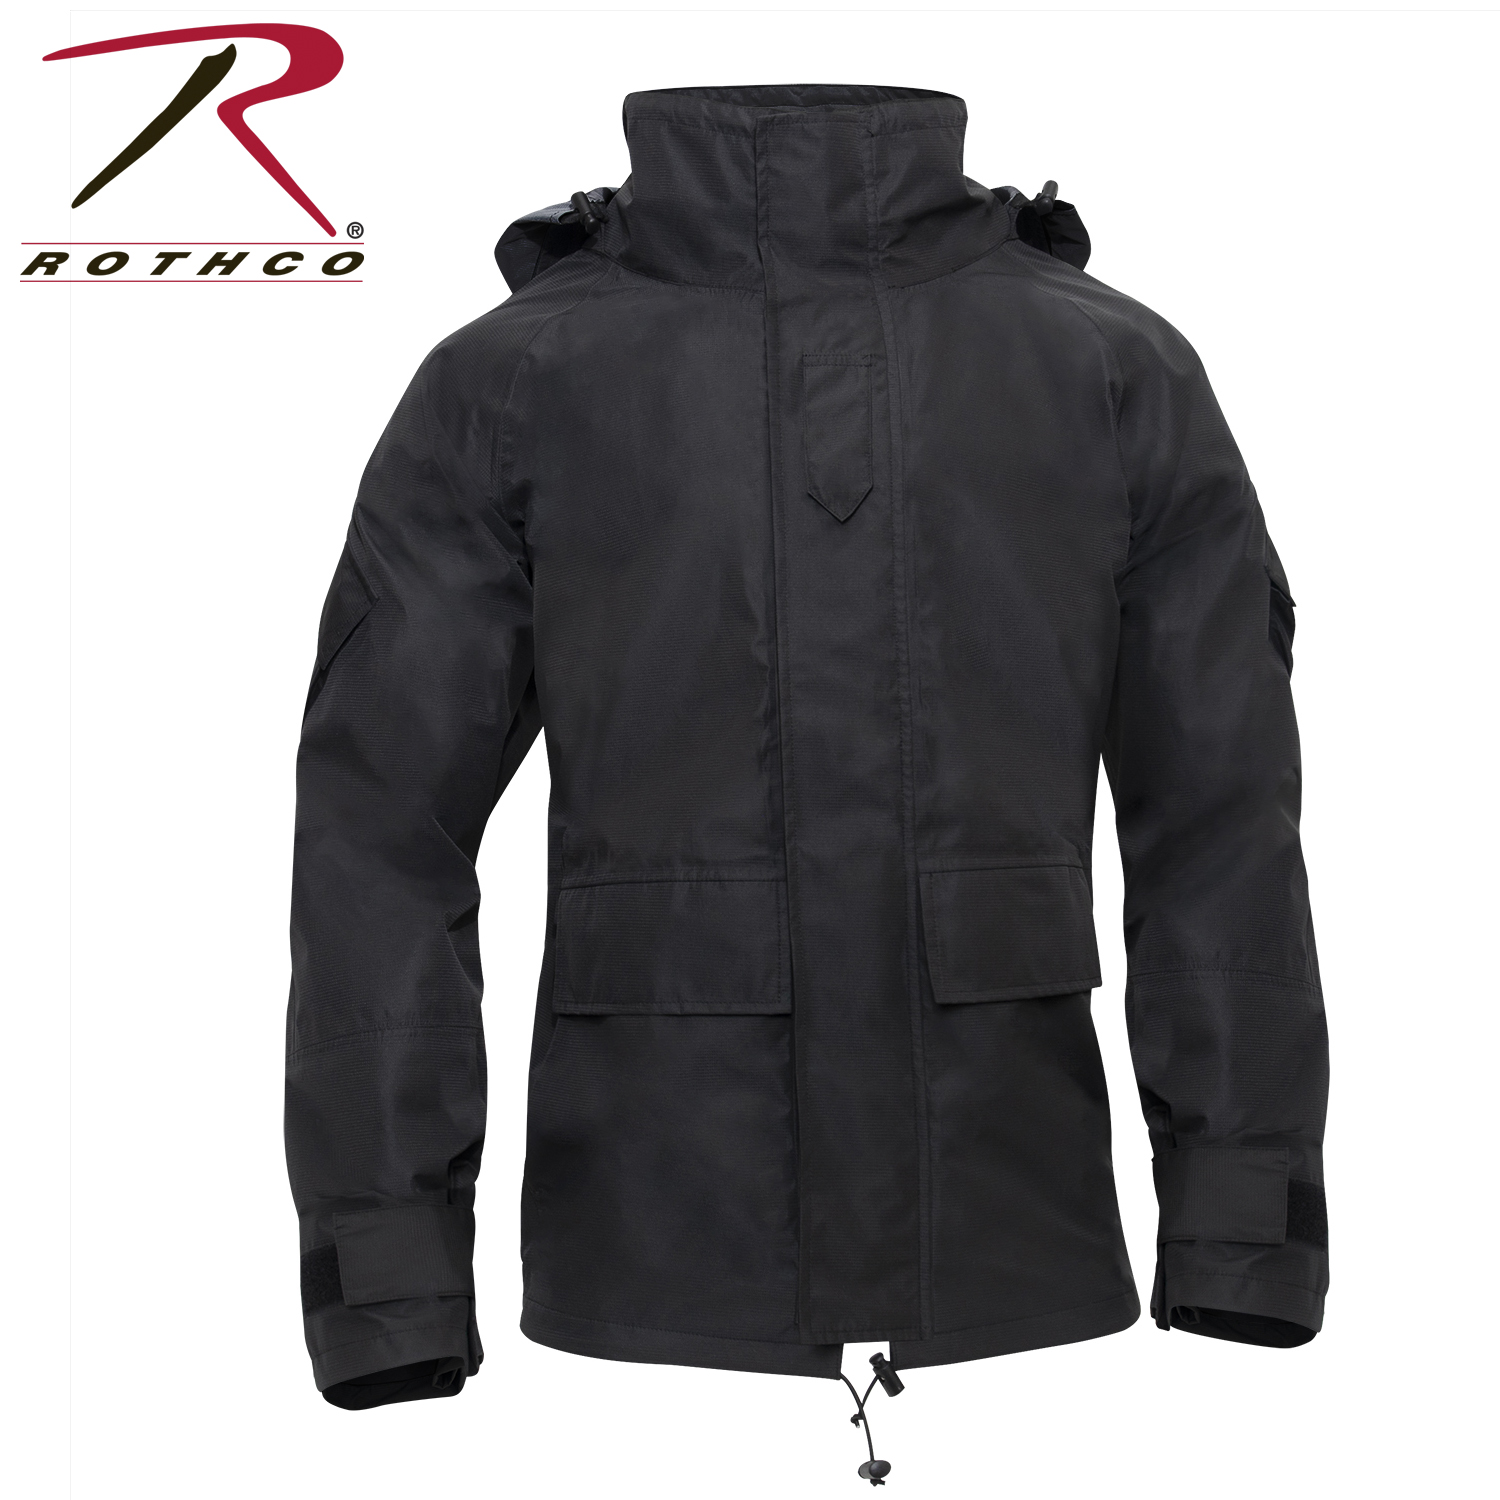 Rothco Tactical Hard Shell HYVAT Jacket - Black